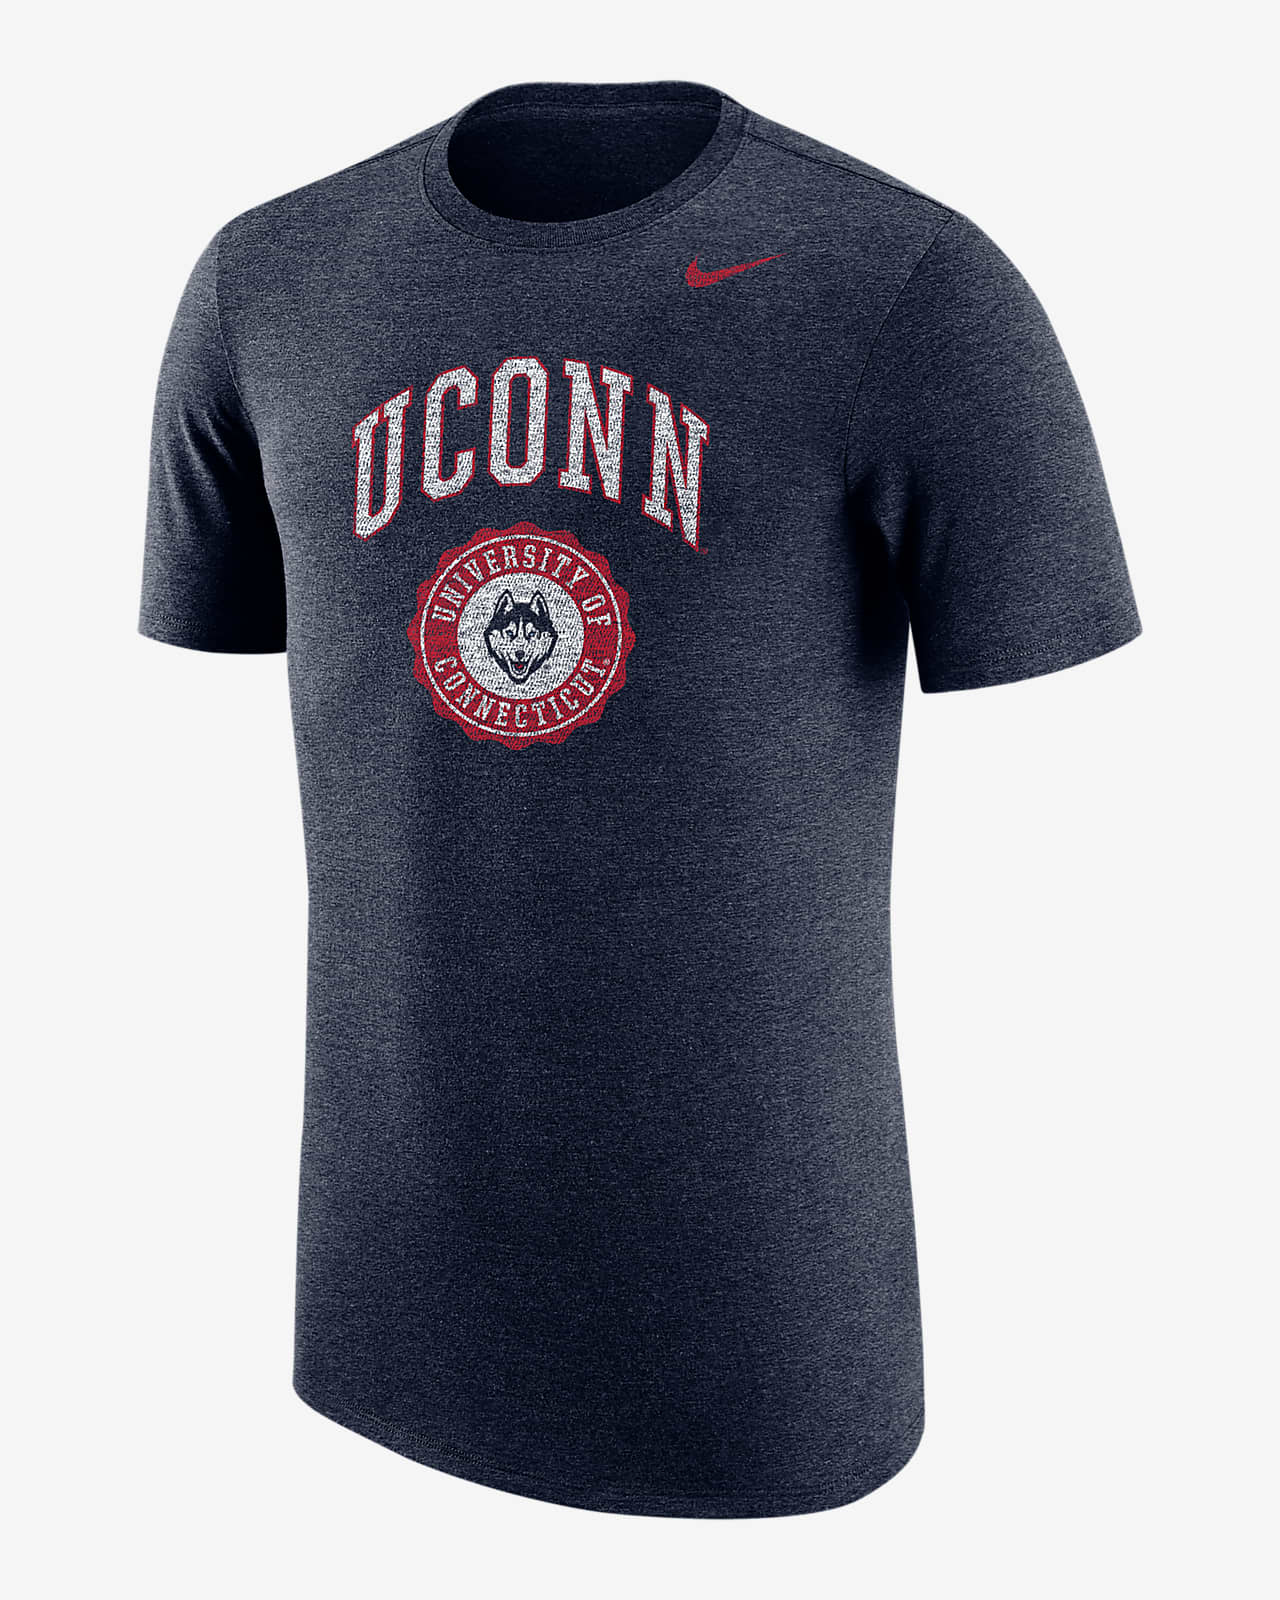 Nike College (UConn) Men's T-Shirt. Nike.com